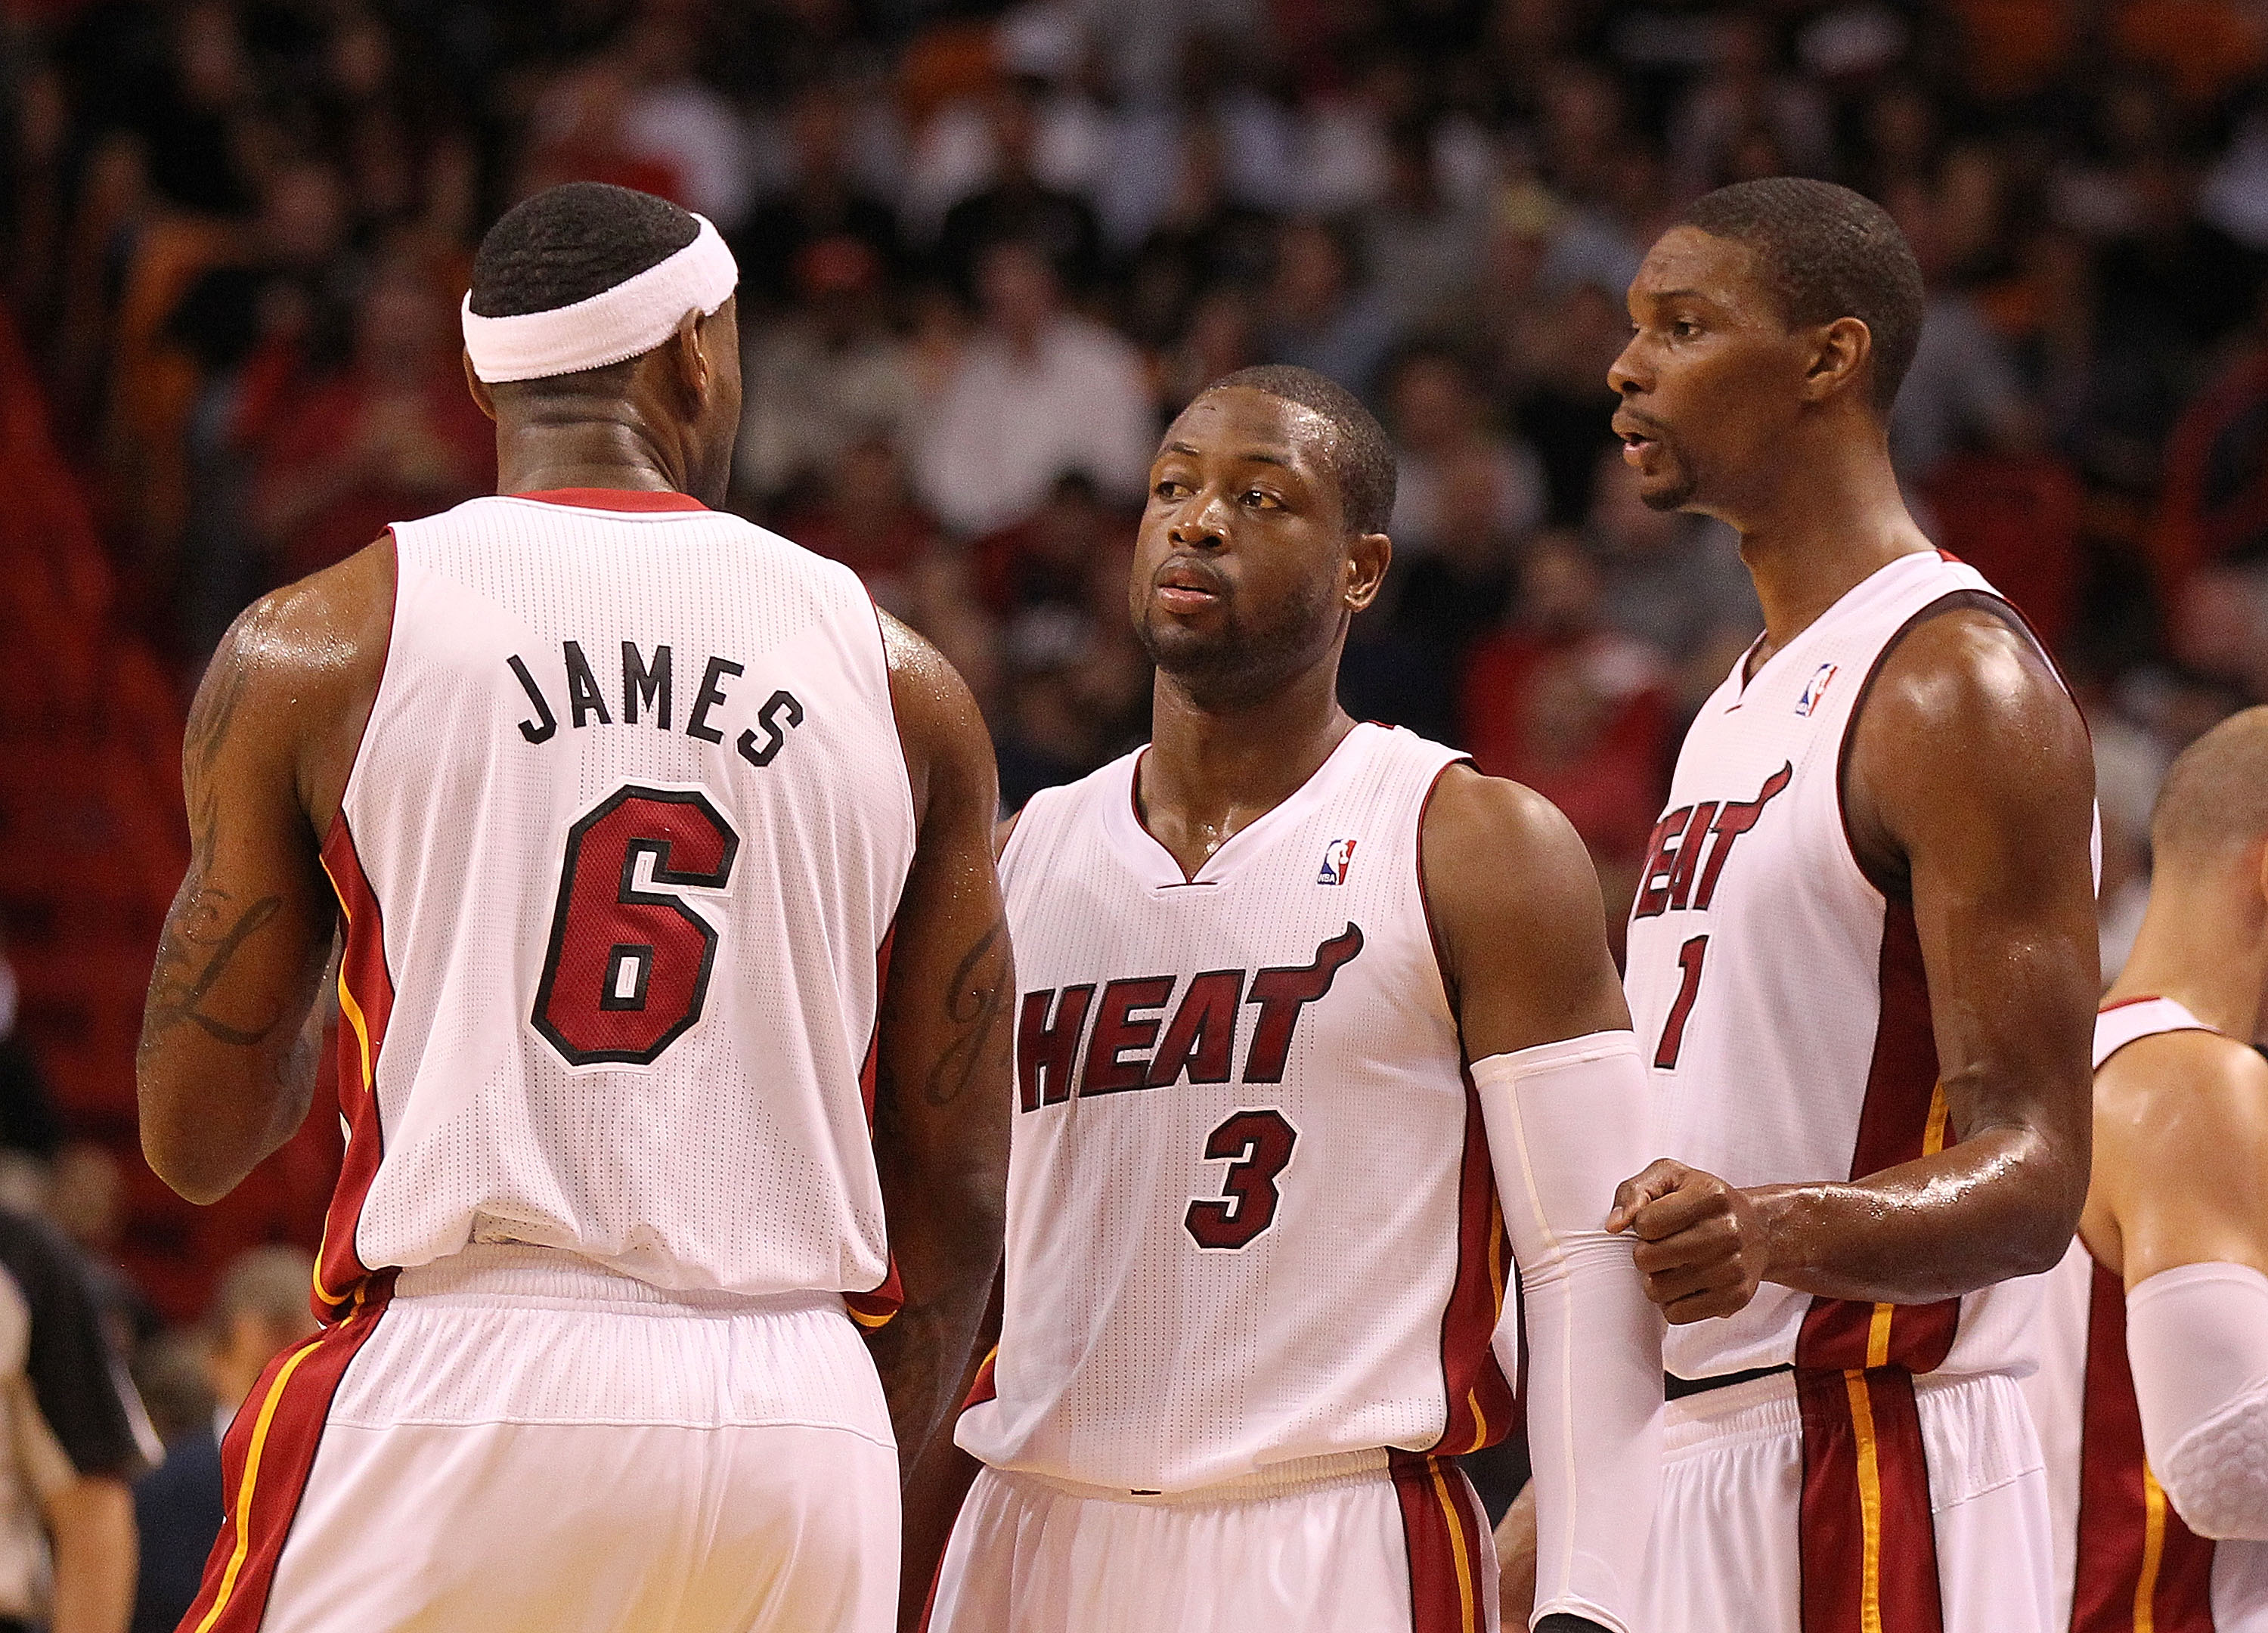 Miami Heat's LeBron James enjoying best offensive start of his career